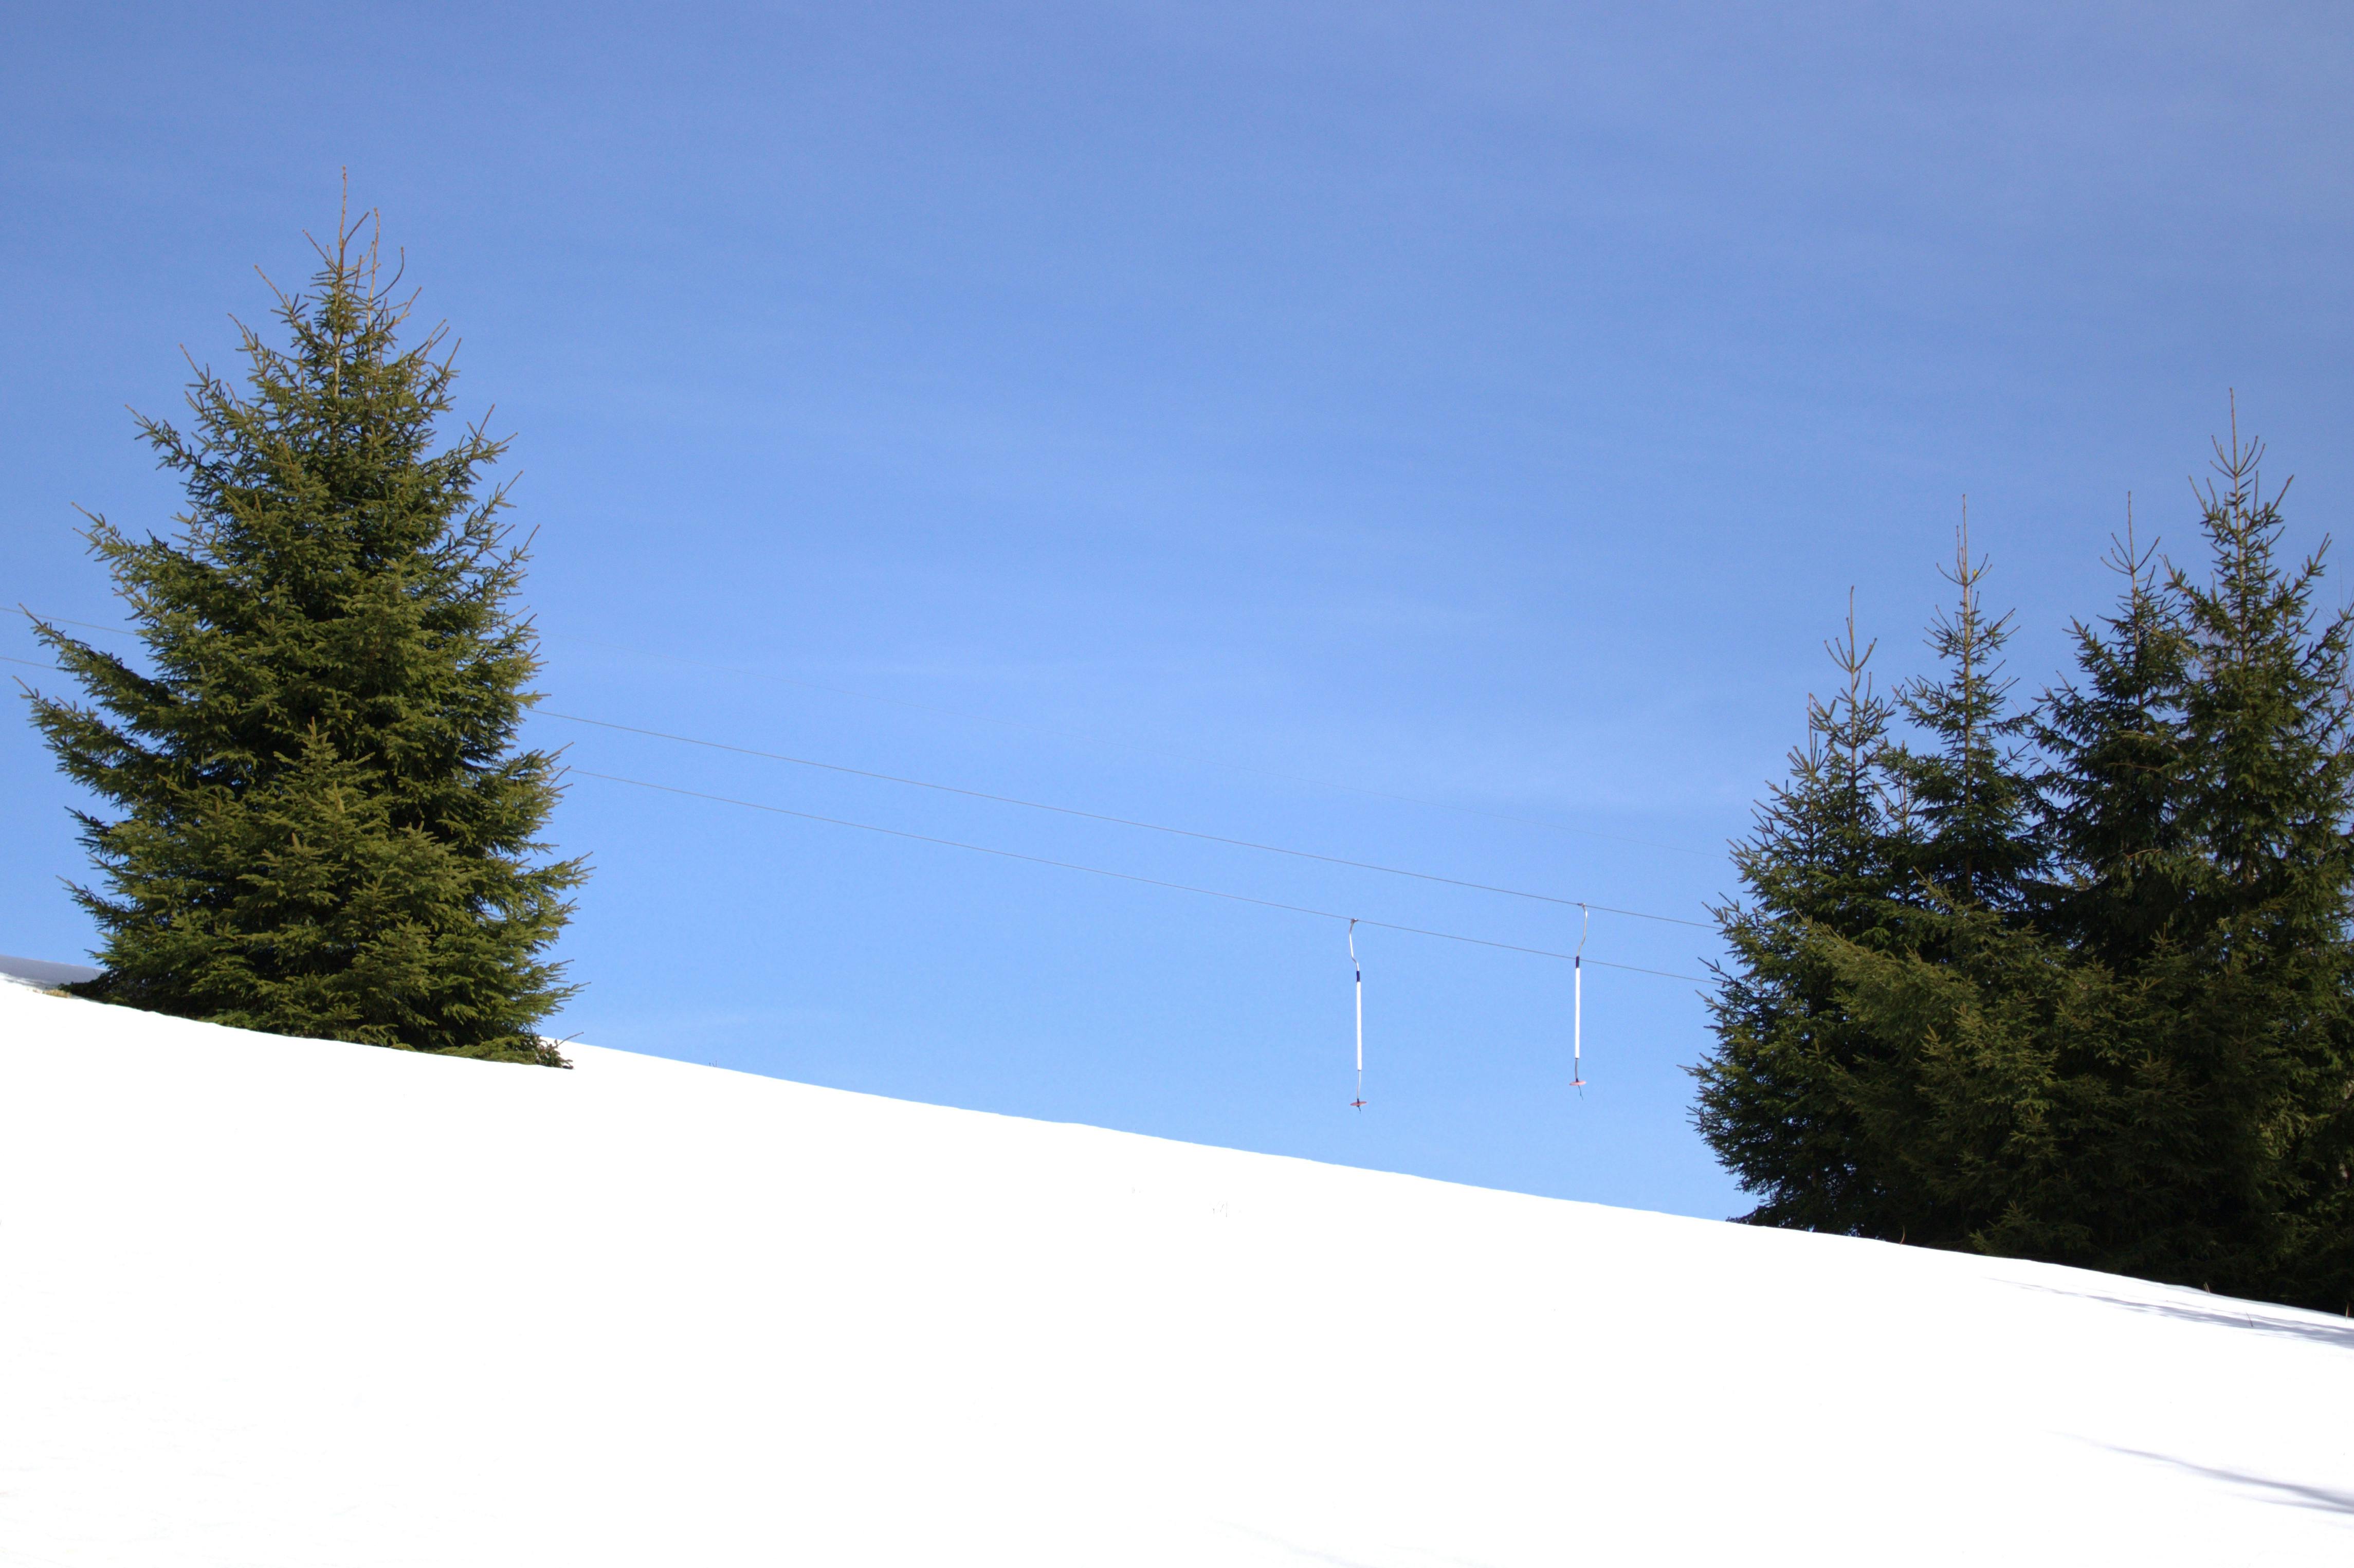 Free stock photo of blue sky, pine trees, ski lift